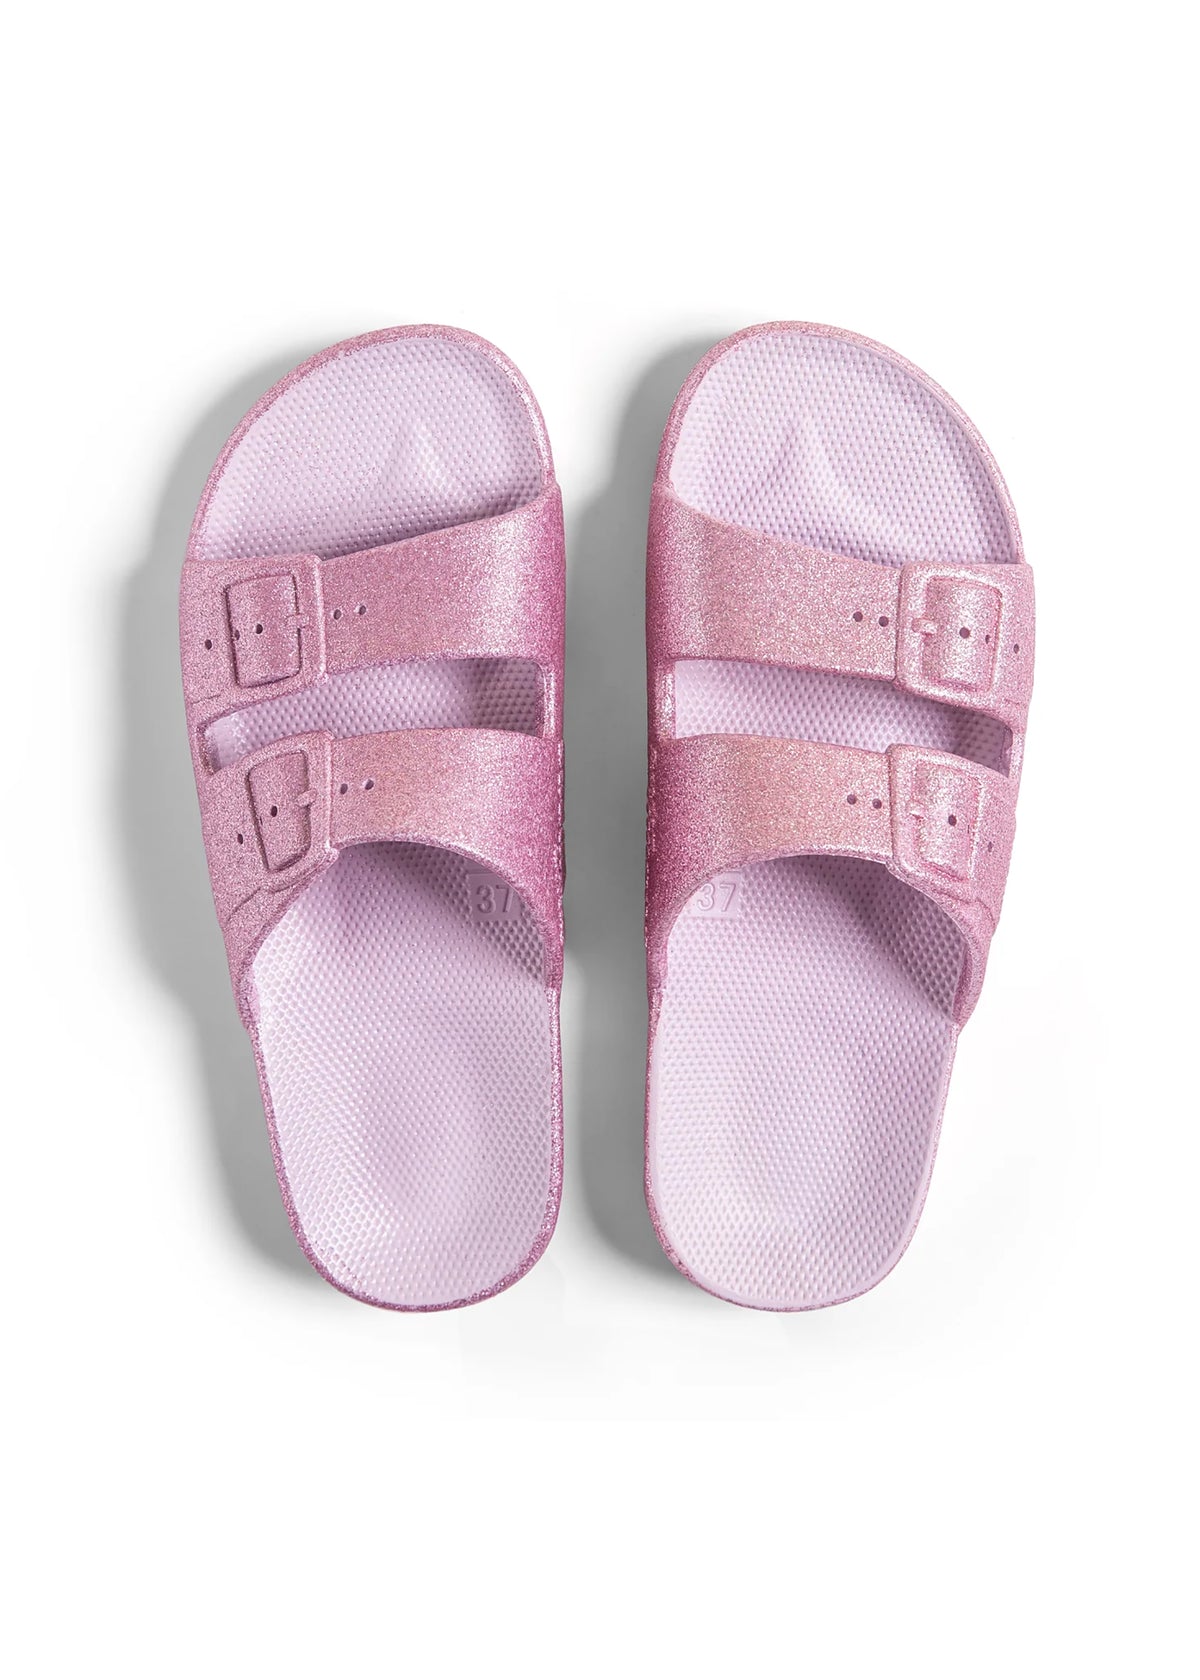 Freedom Moses sandaler - kilar med två remmar, Isla, rosa glitter